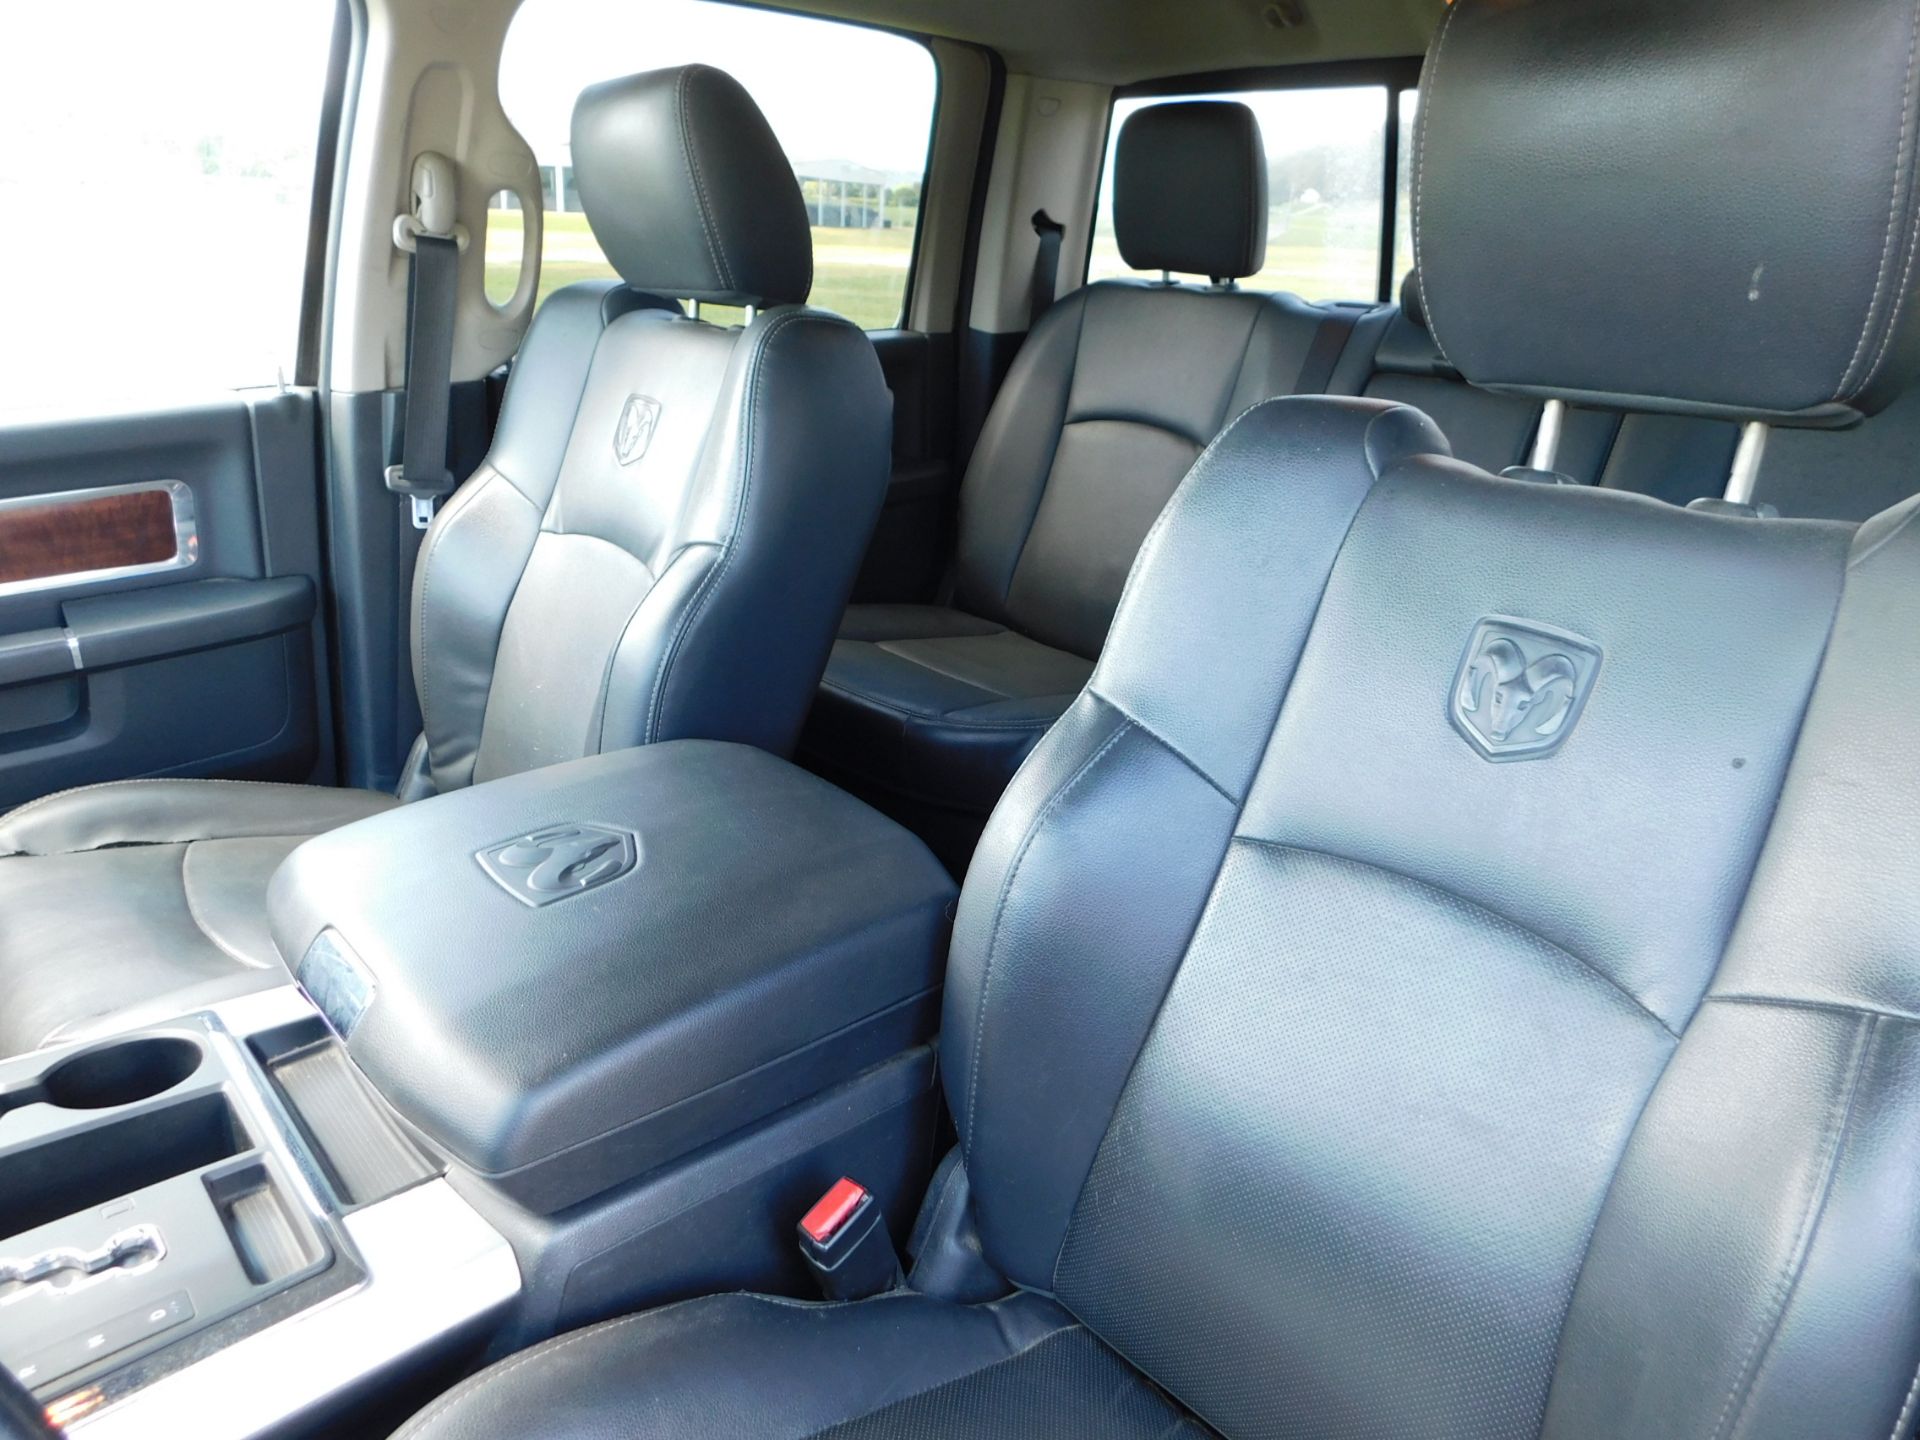 2012 Dodge Ram 1500 Pickup, Crew Cab, 6' Bed, Automatic, 4 WD, AM/FM,AC, PL, PW, Hemi 5.7 L - Image 32 of 53